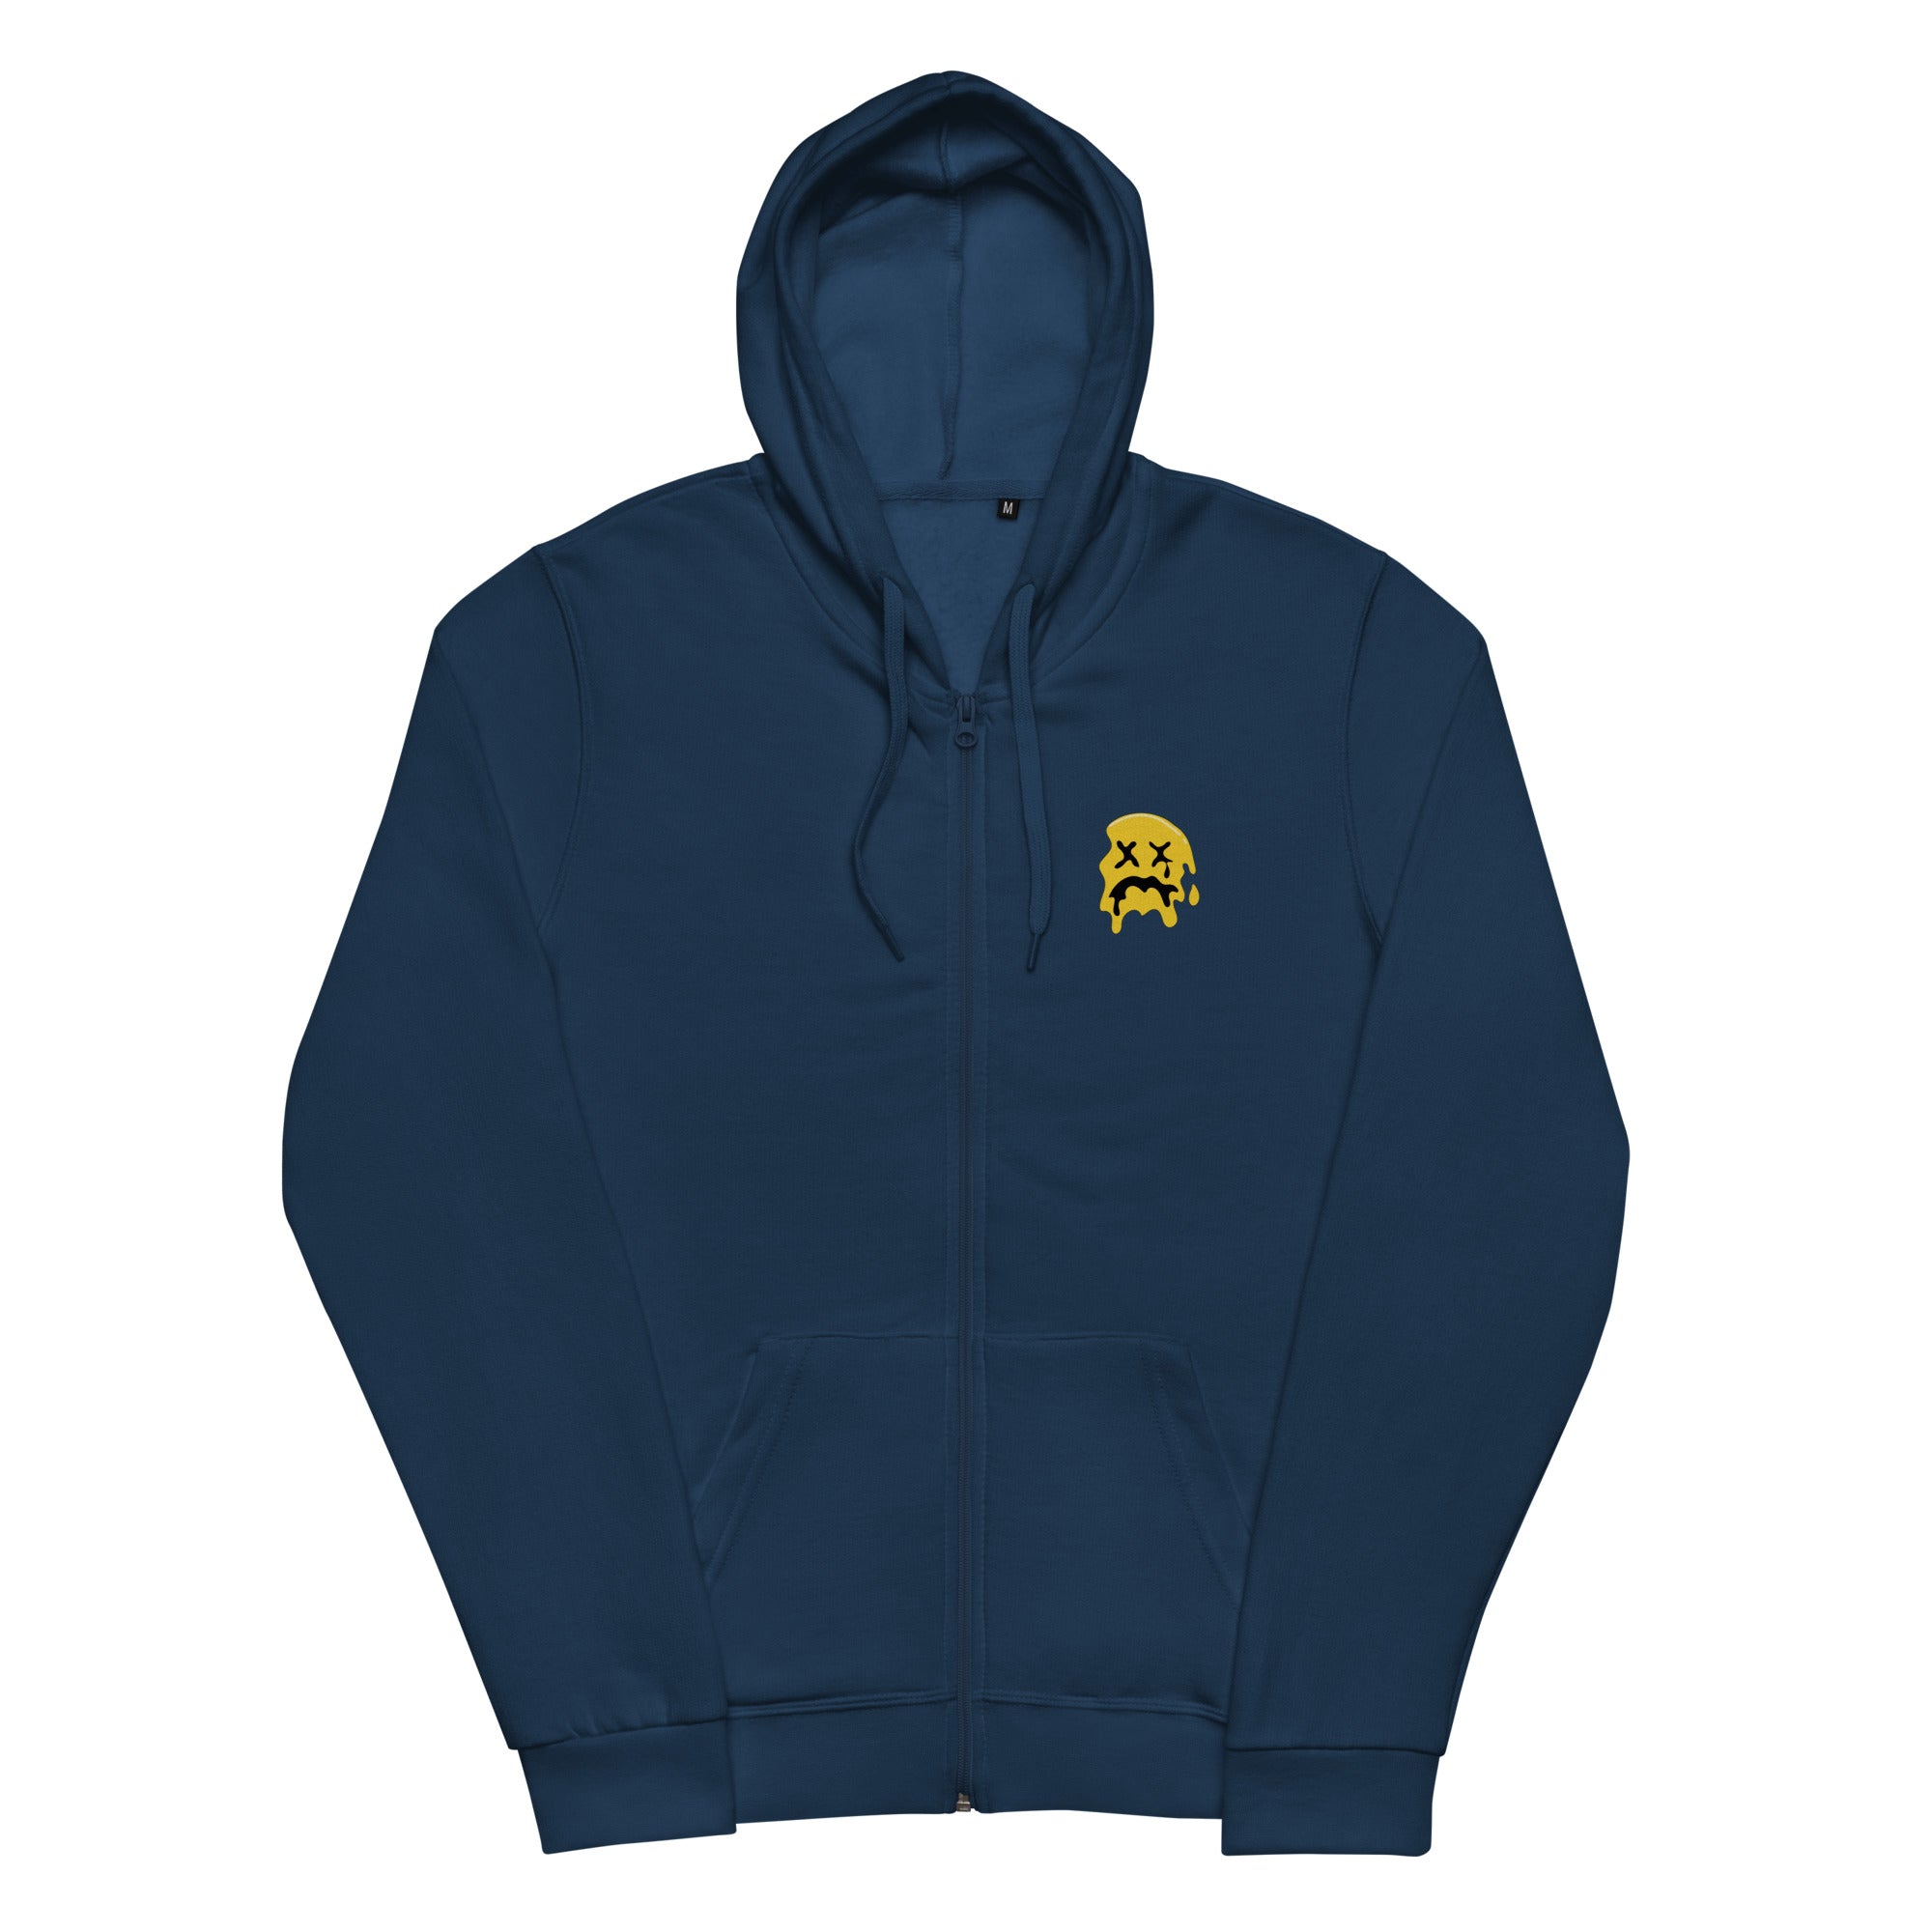 Unisex basic zip hoodie - pennyhillsregret